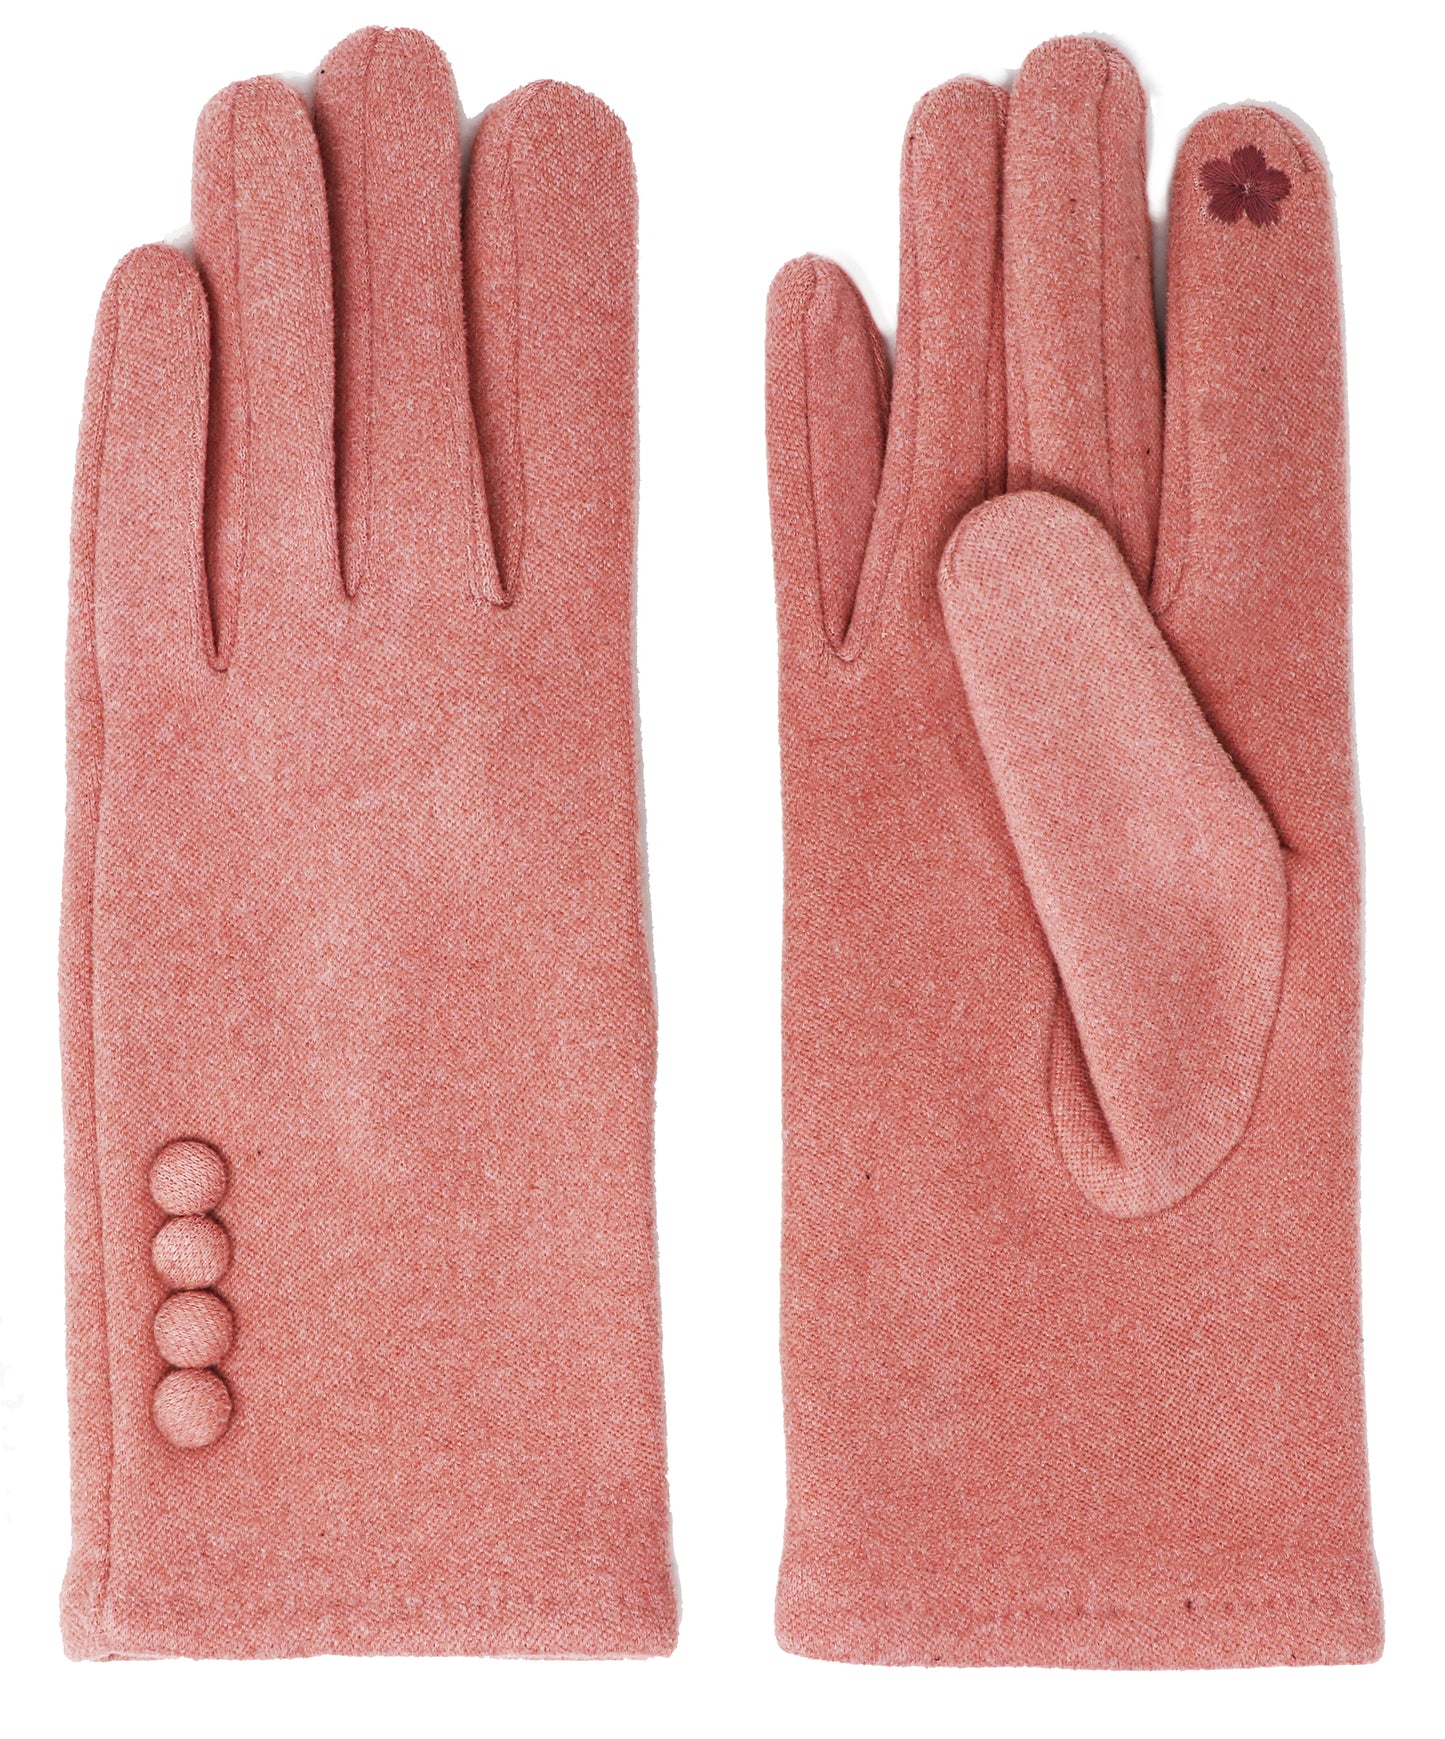 Four Button Touchscreen Plain Colour Gloves